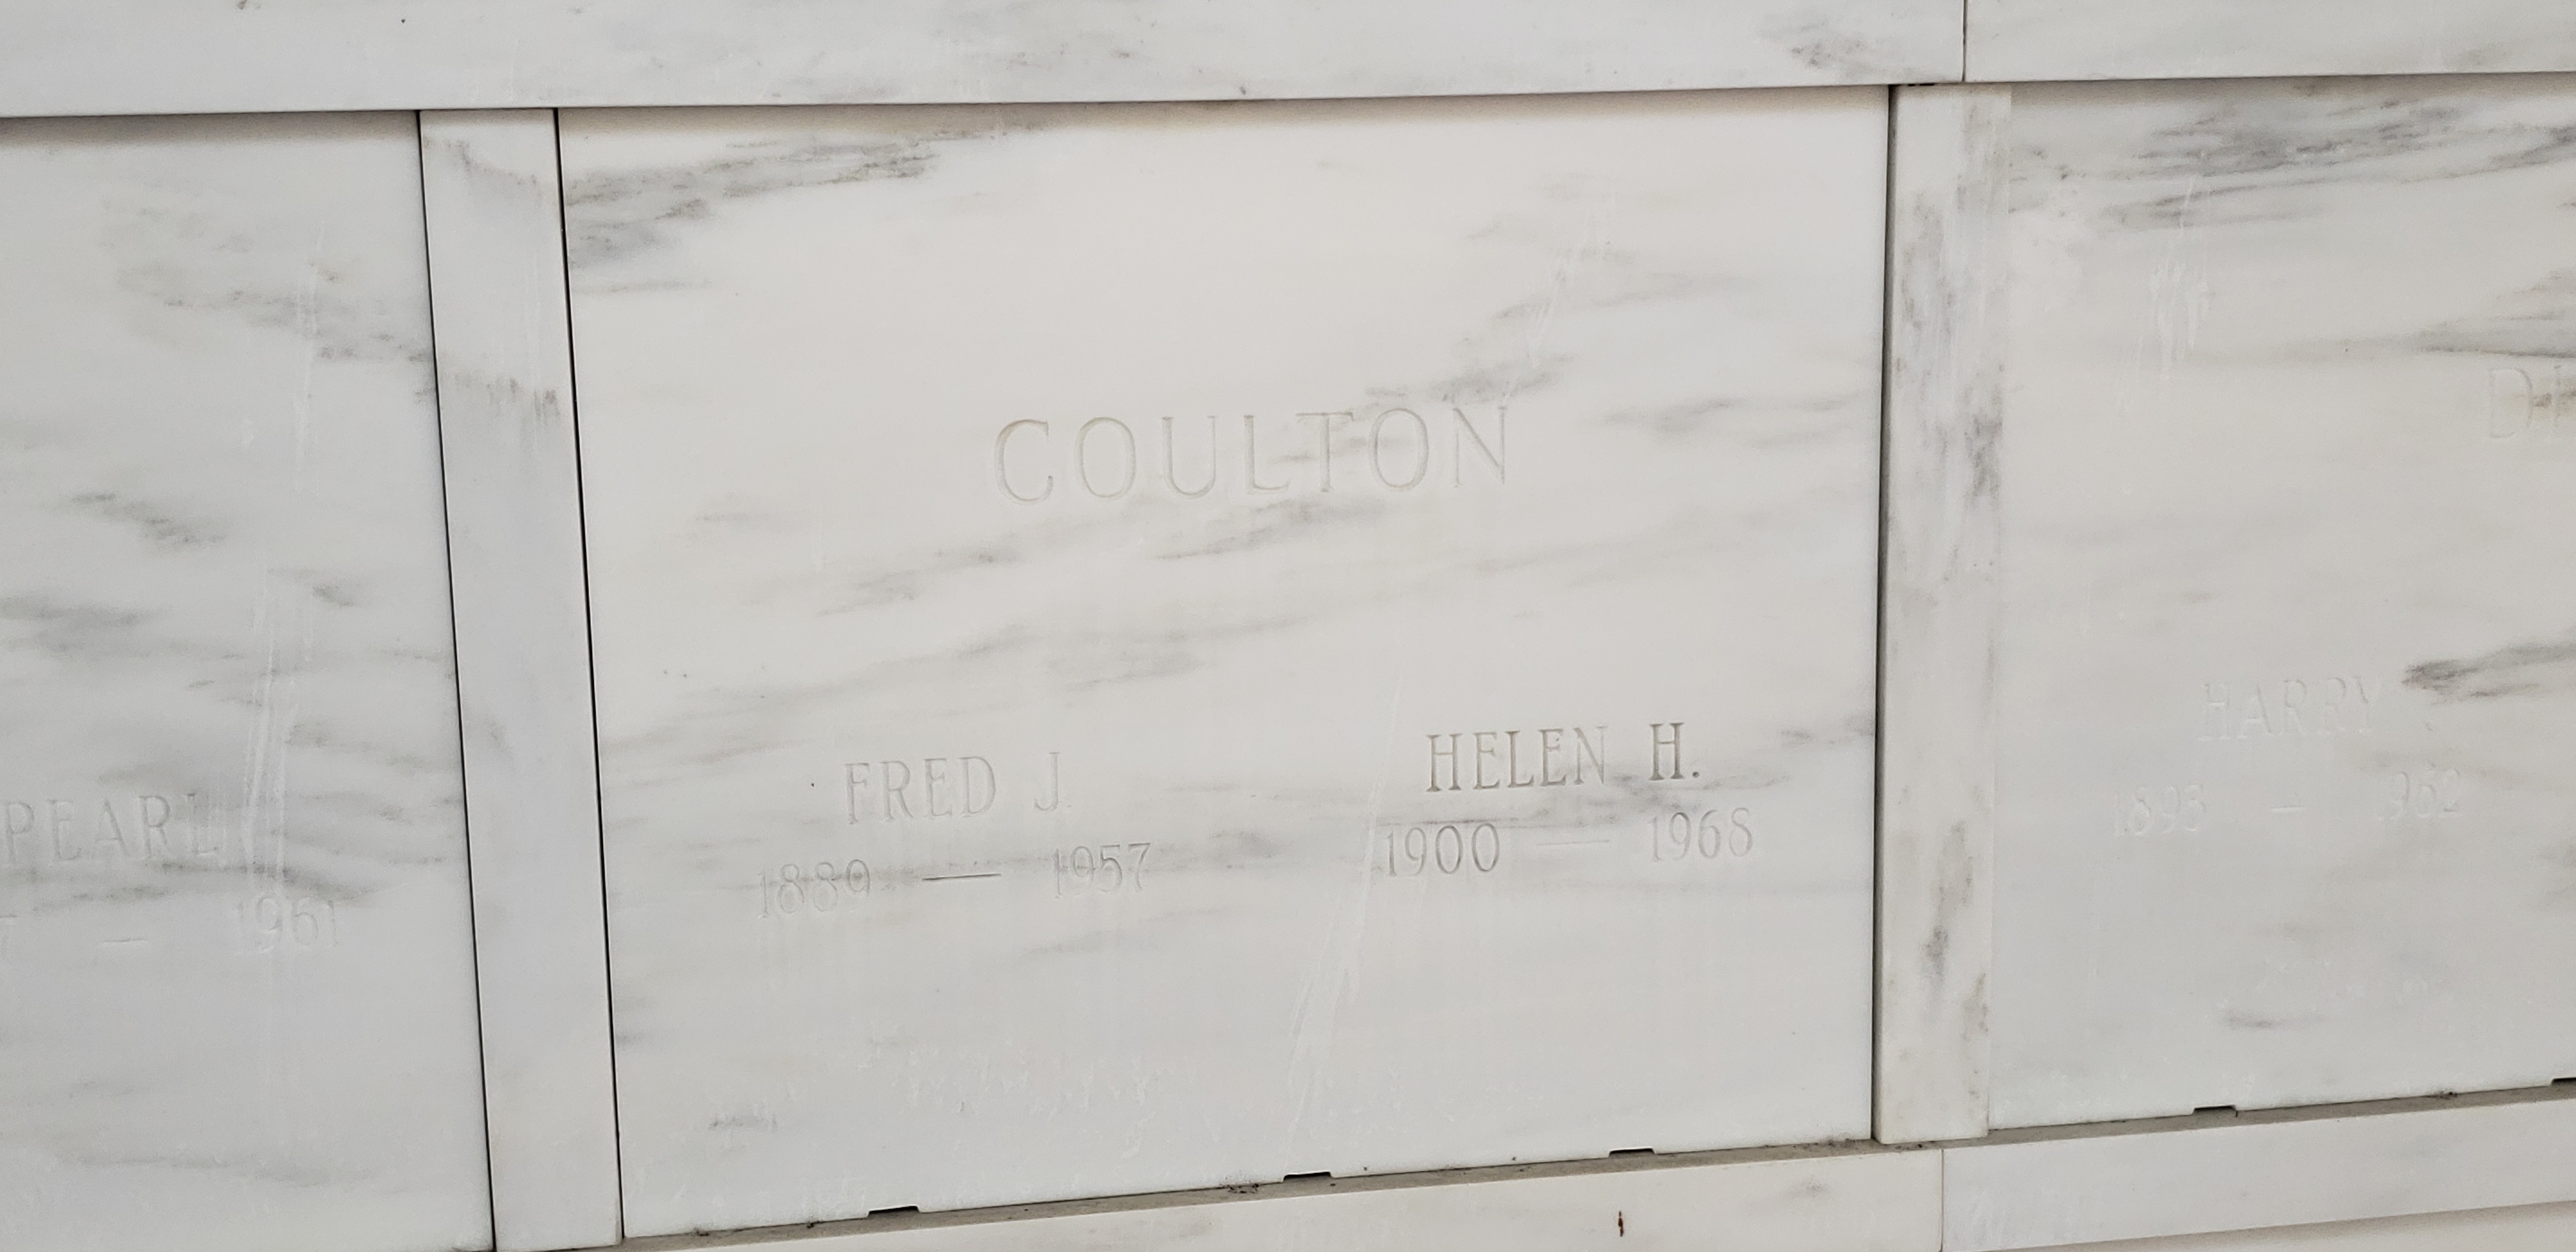 Helen H Coulton